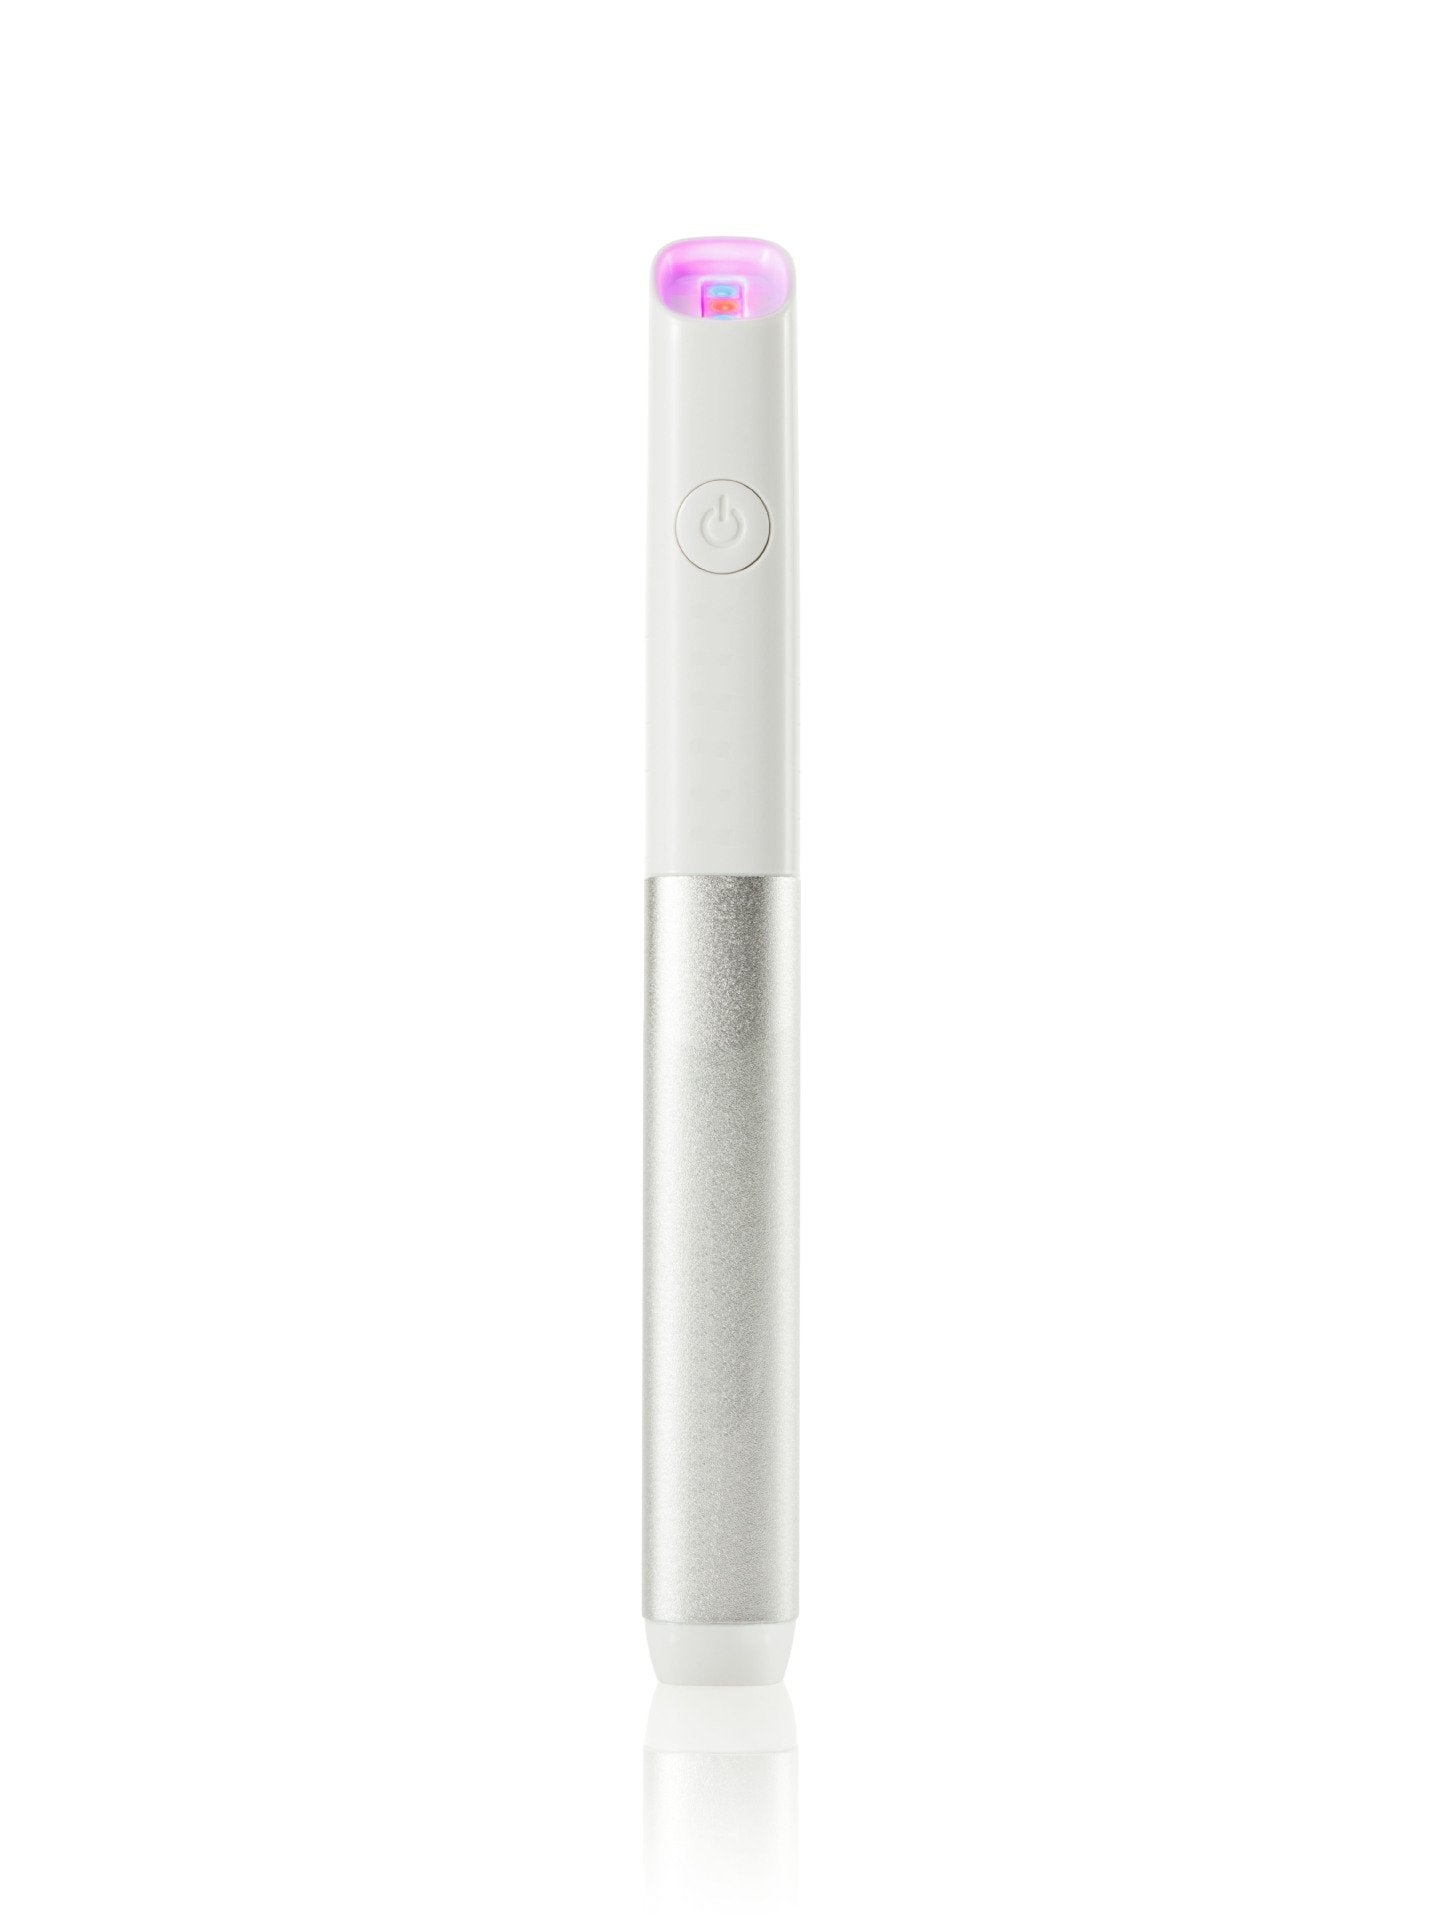 Acne Laser Pen